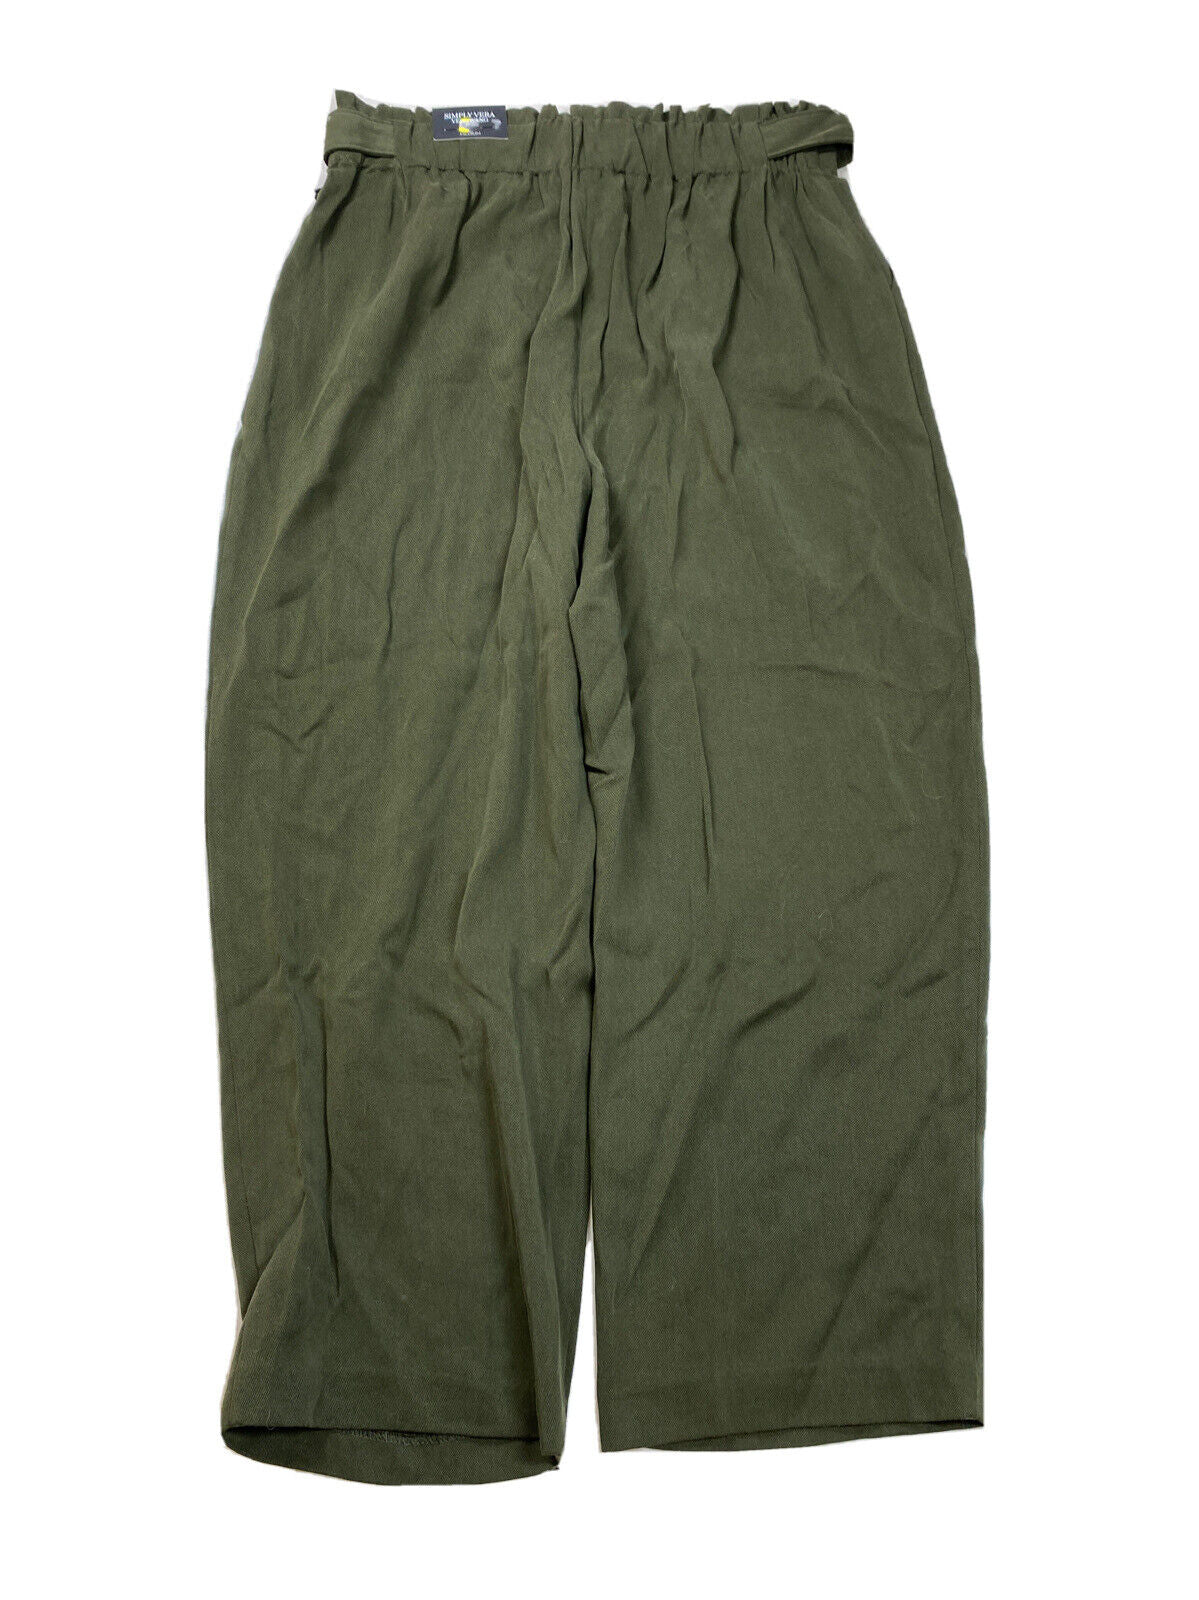 NEW Simply Vera Wang Women's Olive Green Loose Straight Leg Pants - M